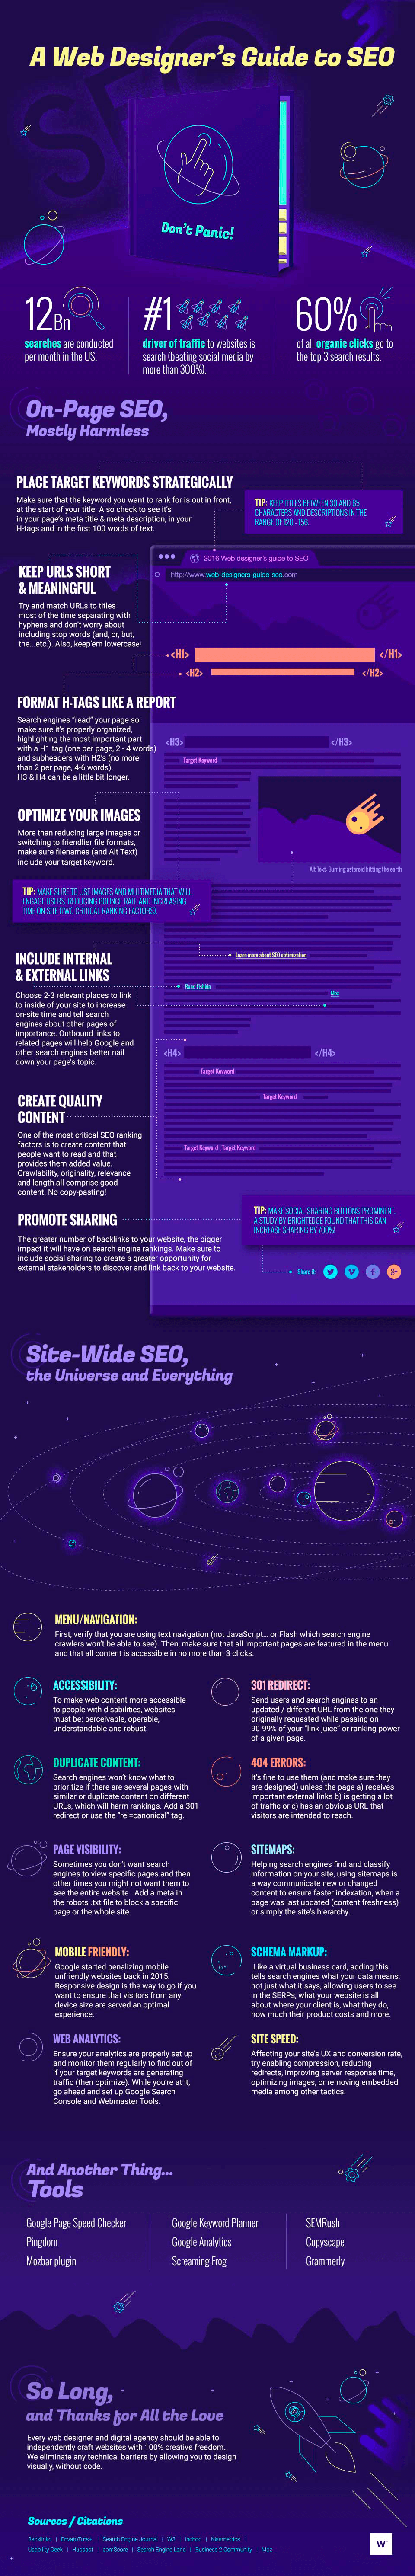 PixoLabo - Web Designer's SEO Guide - Webydo Infographic